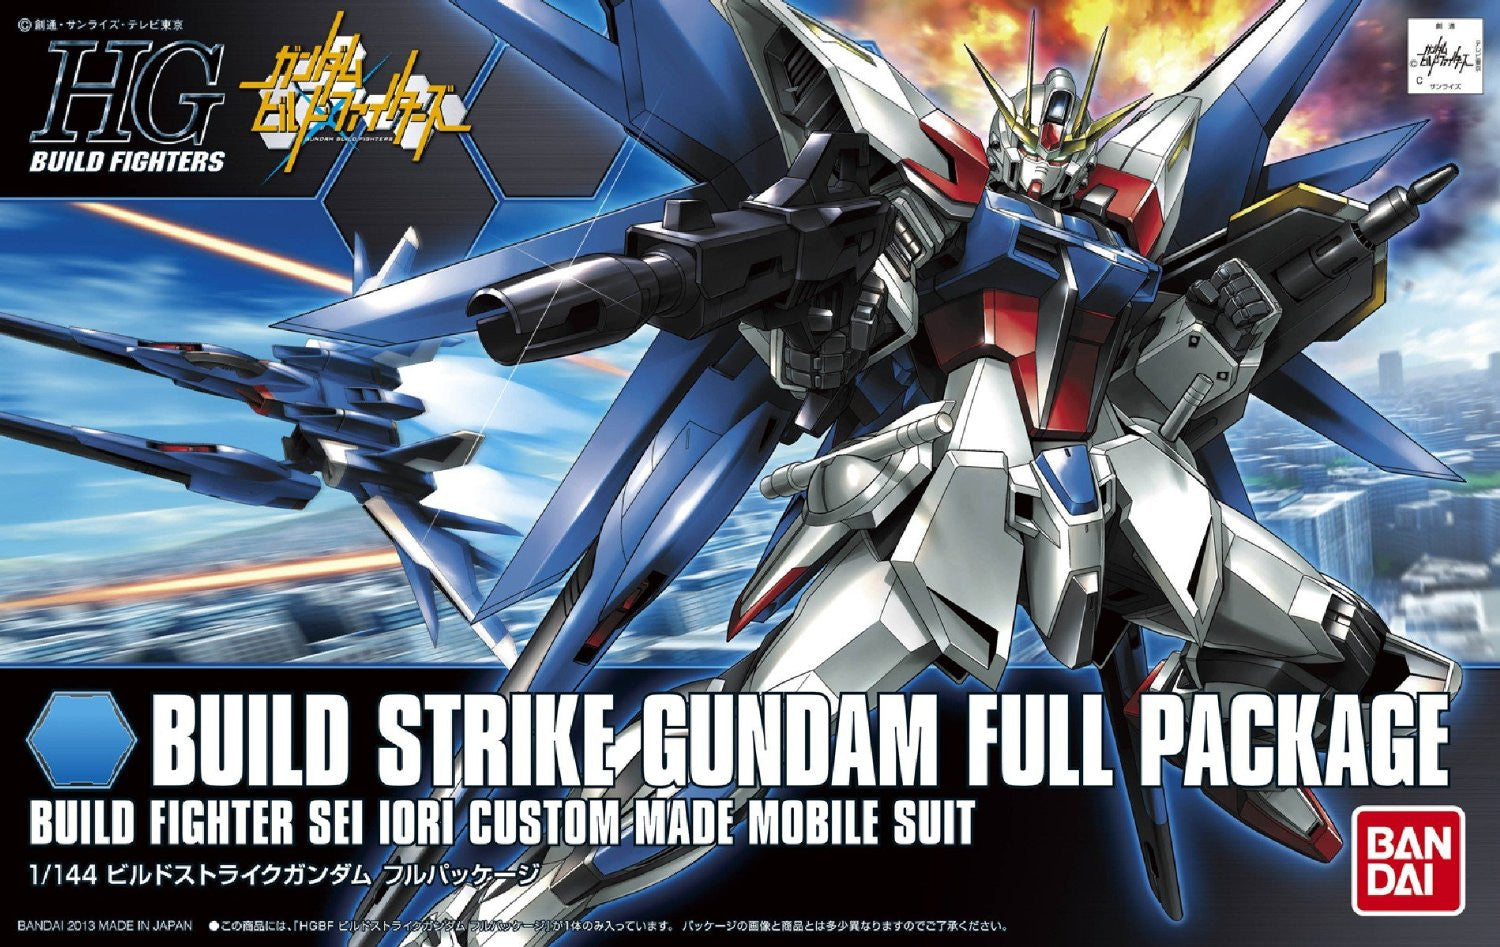 HGBF#001 Build Strike Gundam Full Package